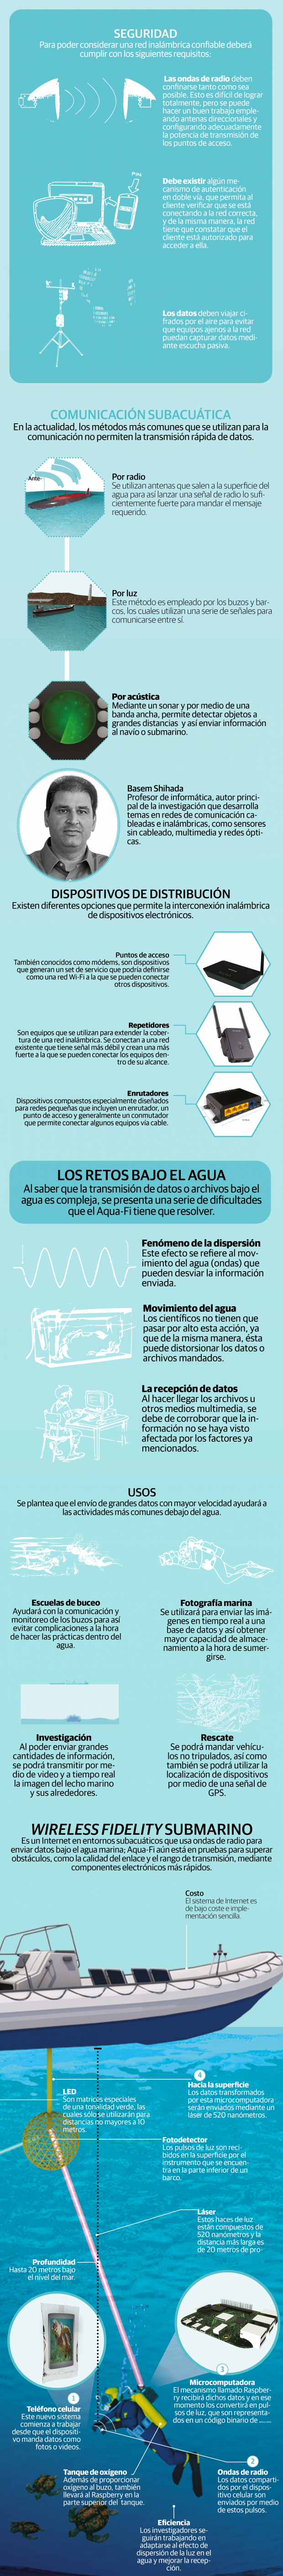 Aqua-Fi, el primer Wi-Fi mediante LED y láser para navegar bajo el agua